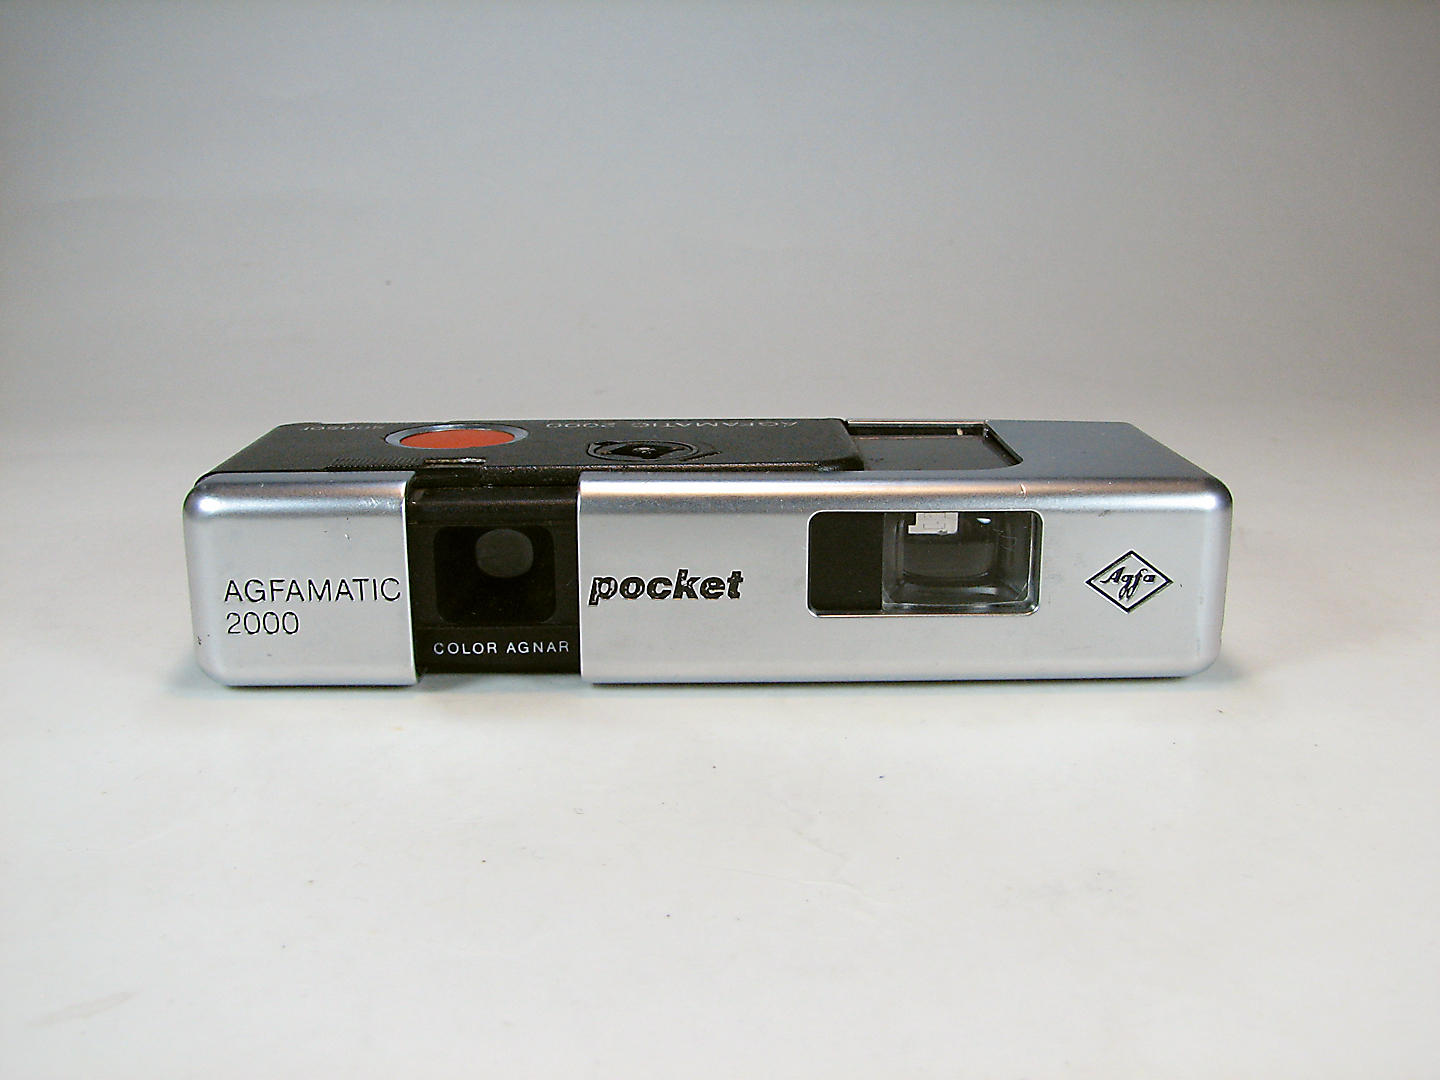 دوربین آگفا AGFA Agfamatic 2000 Pocket